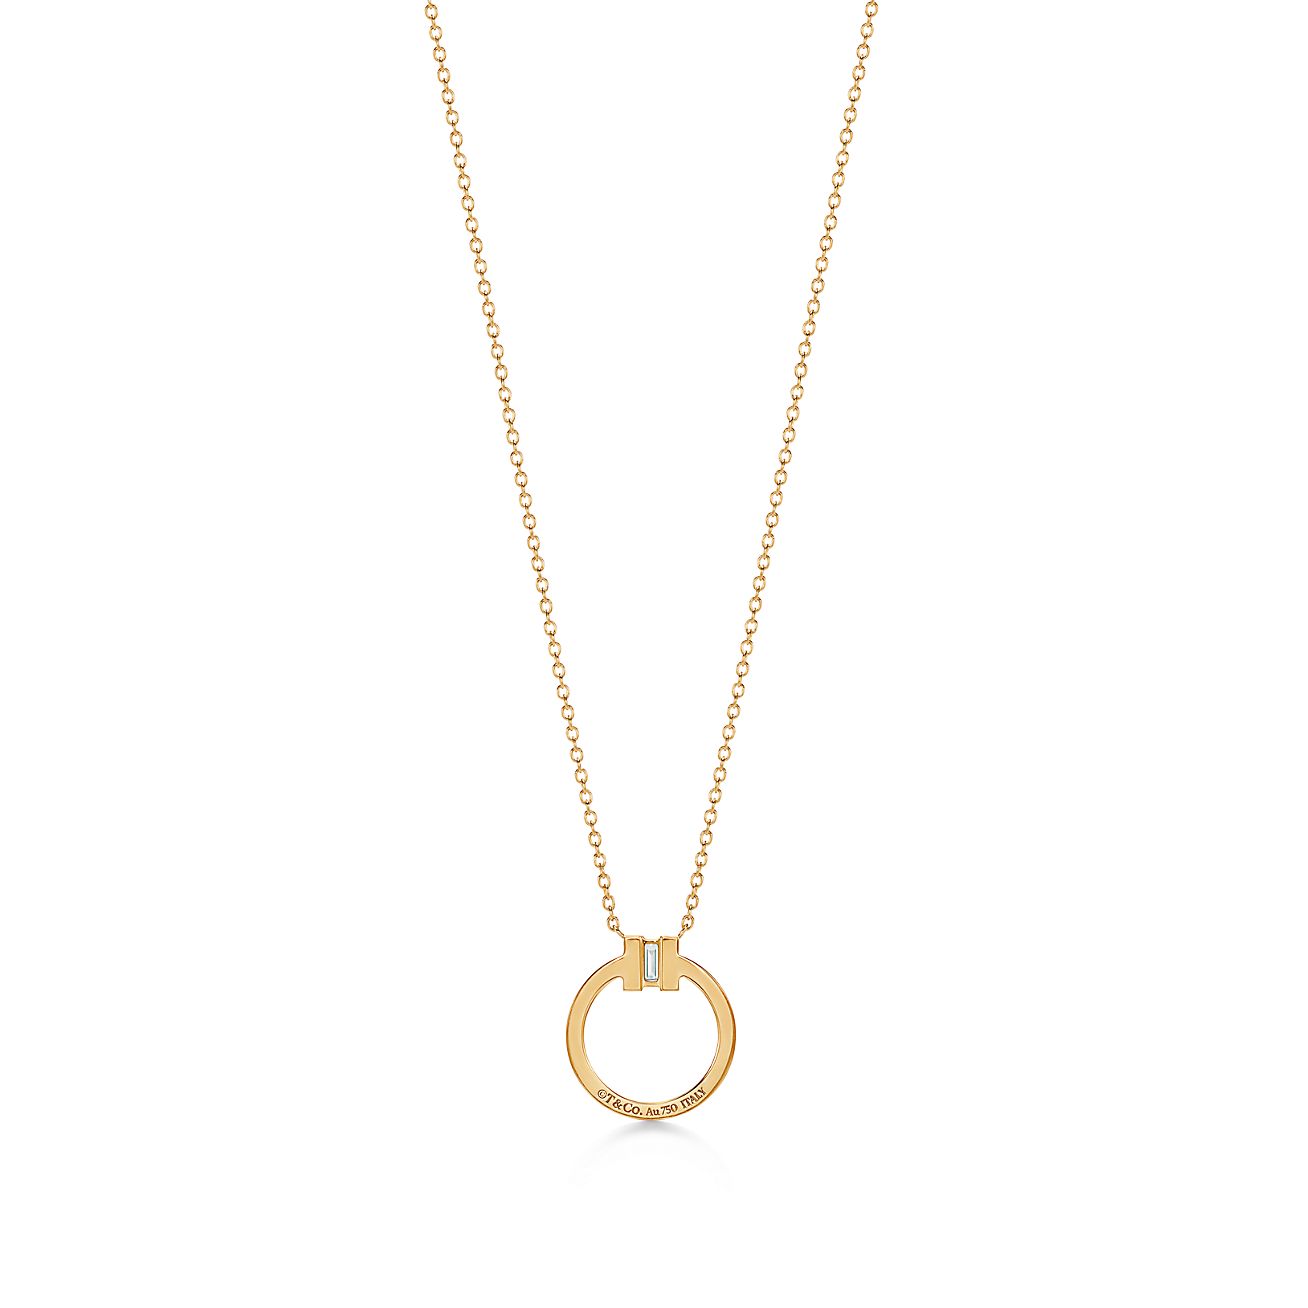 Cartier 18K White Gold Diamond Pavé Small Heart Pendant Necklace